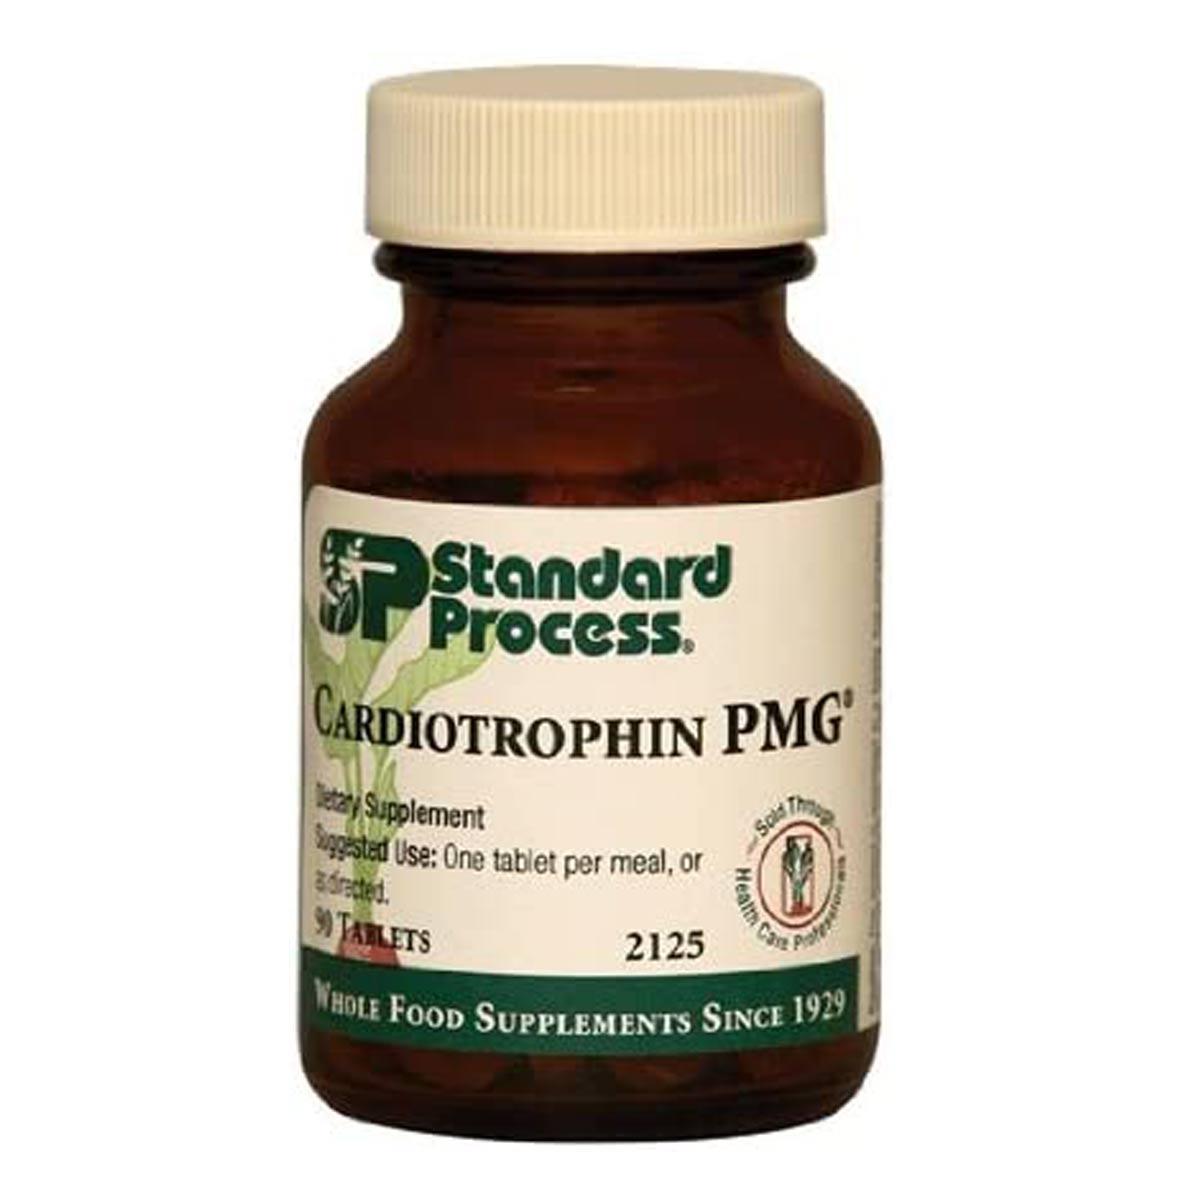 Primary image of Cardiotrophin PMG